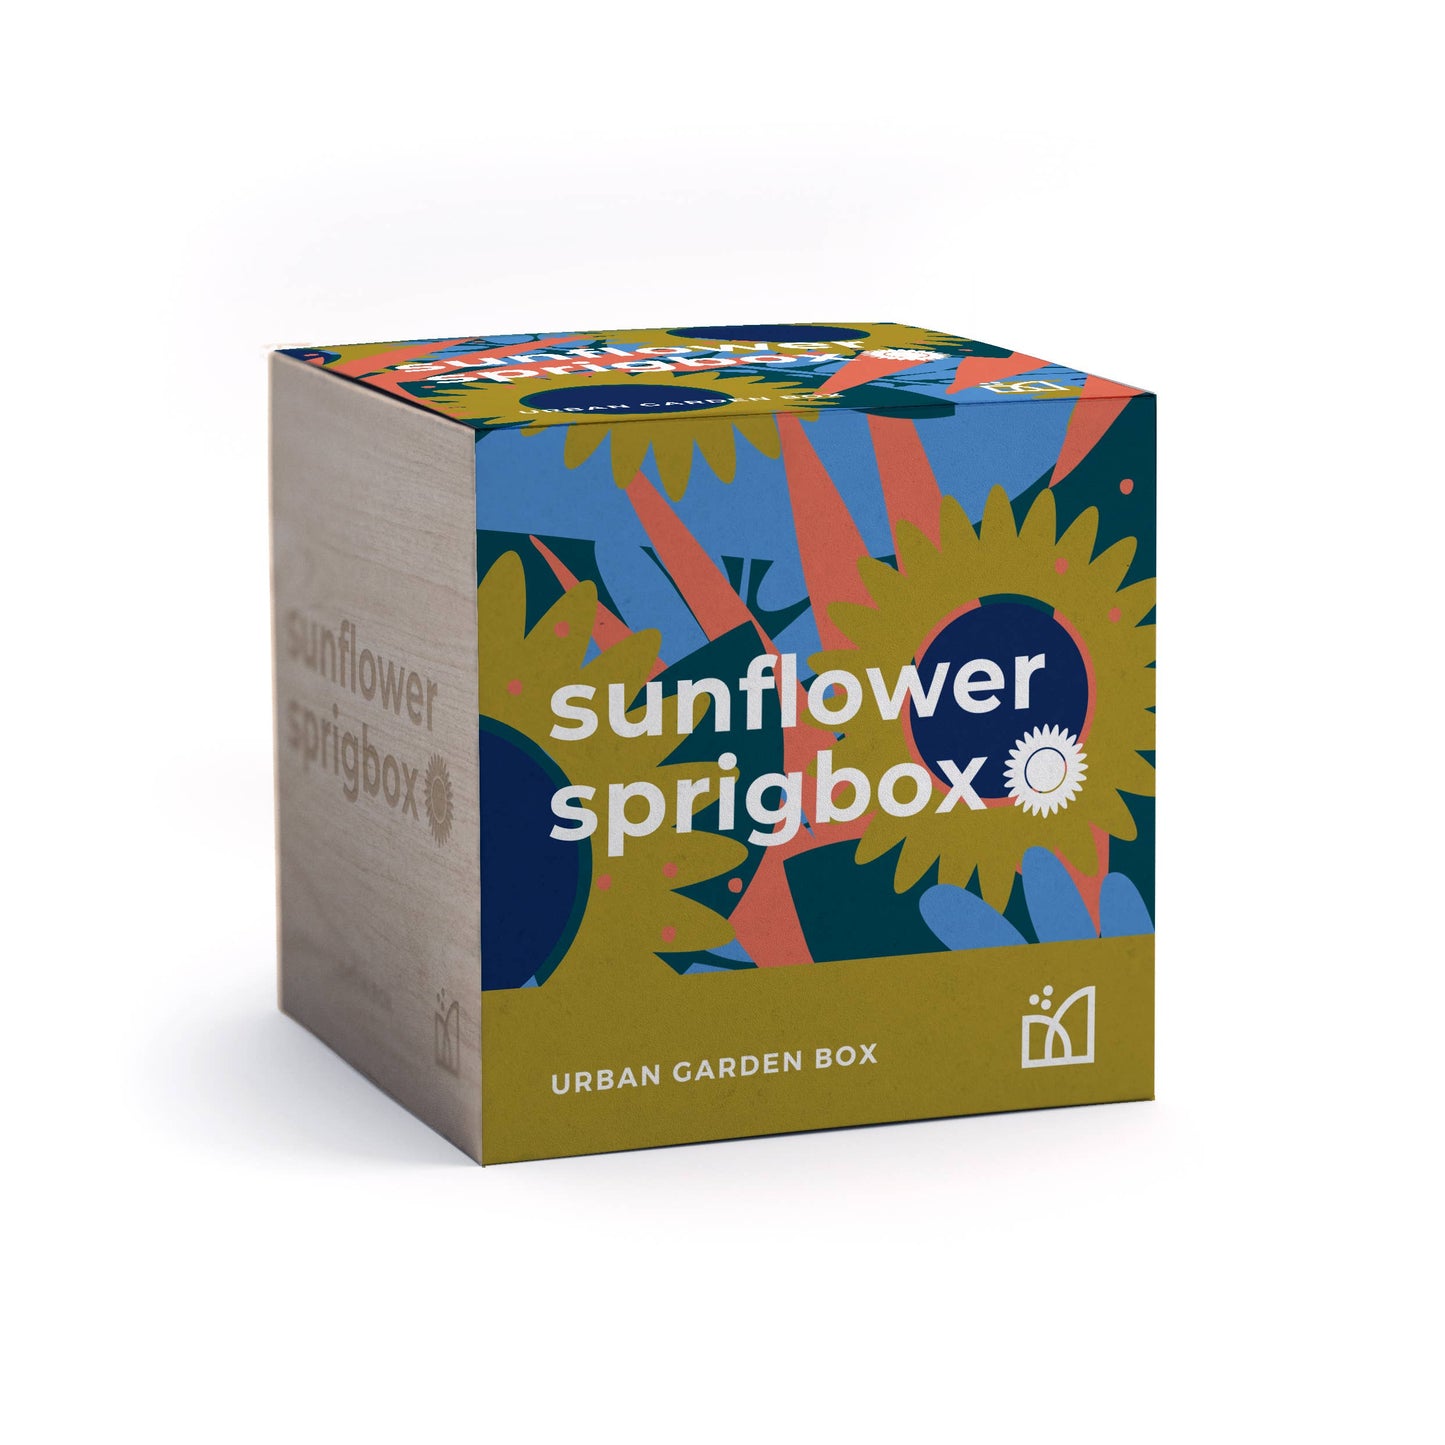 Sunflower Grow Kit